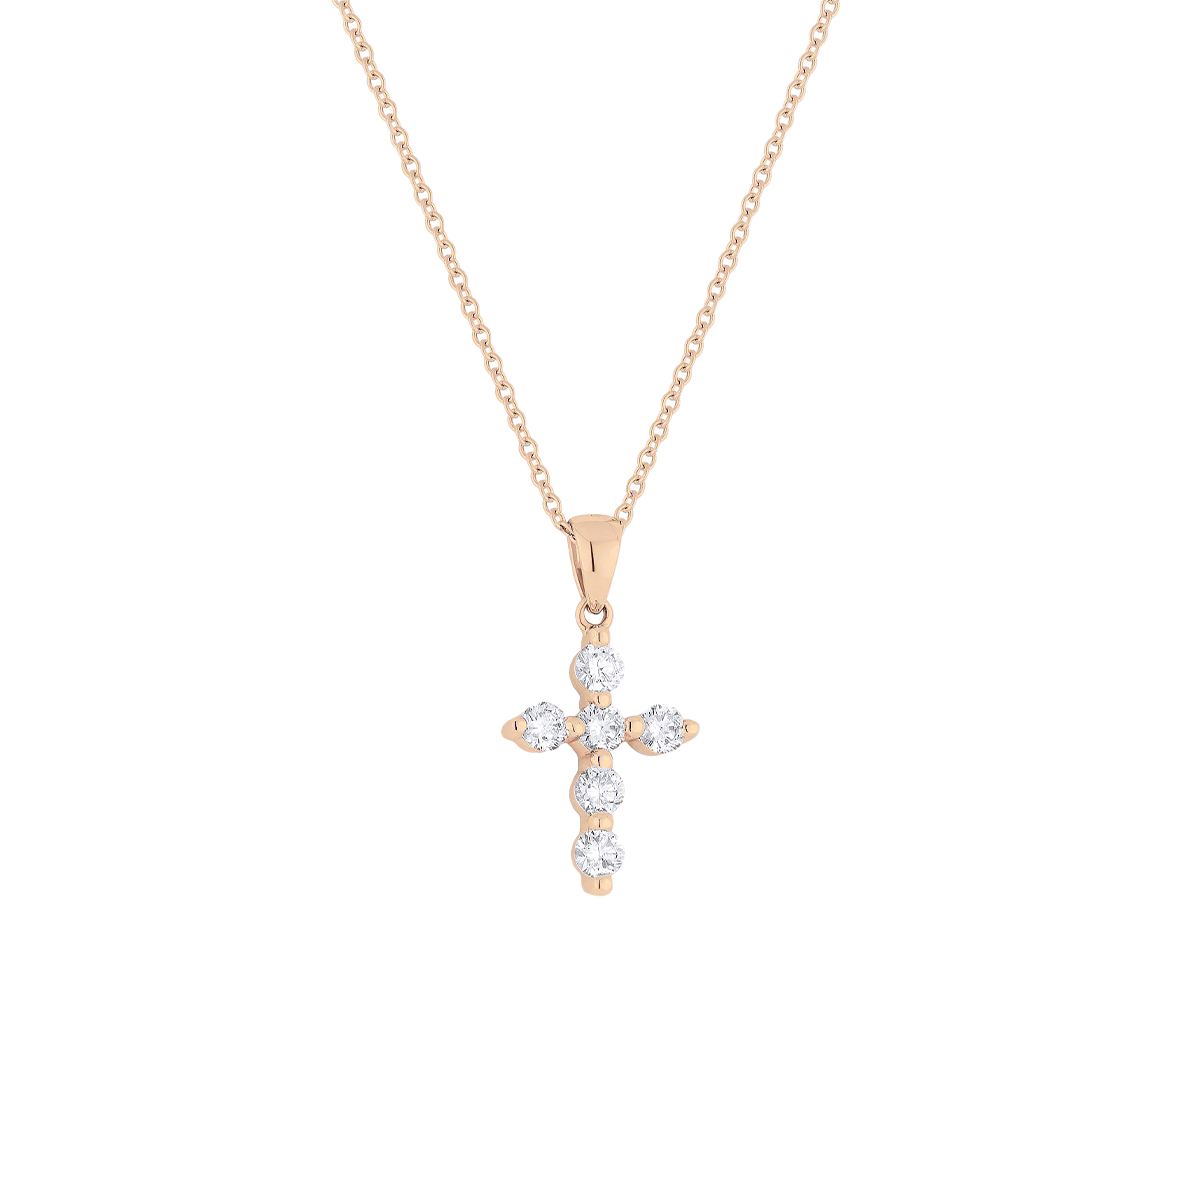 14K Rose Gold Diamond Cross Pendant with Chain